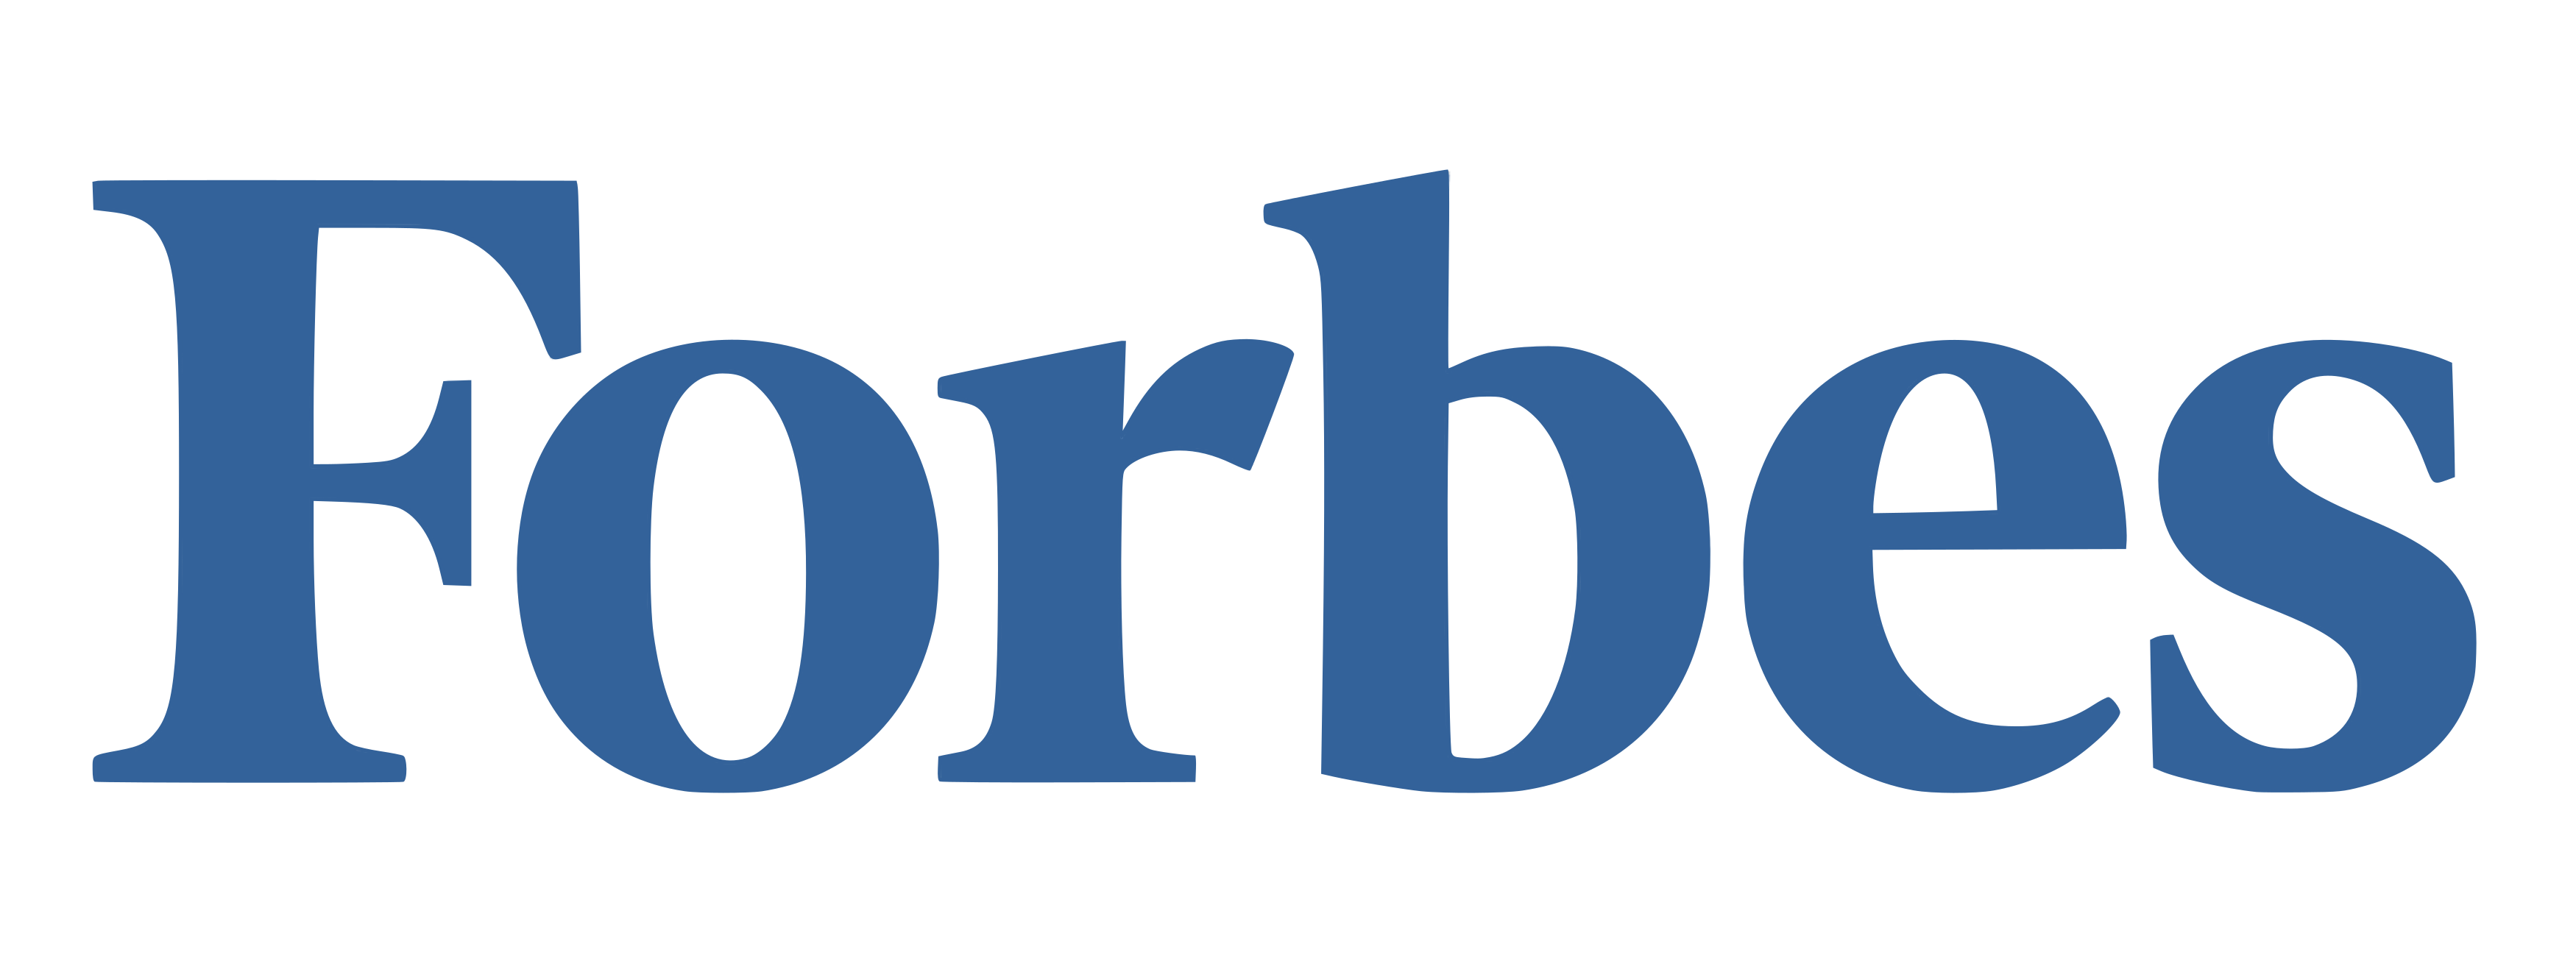 Forbes Logo Png Transparent &